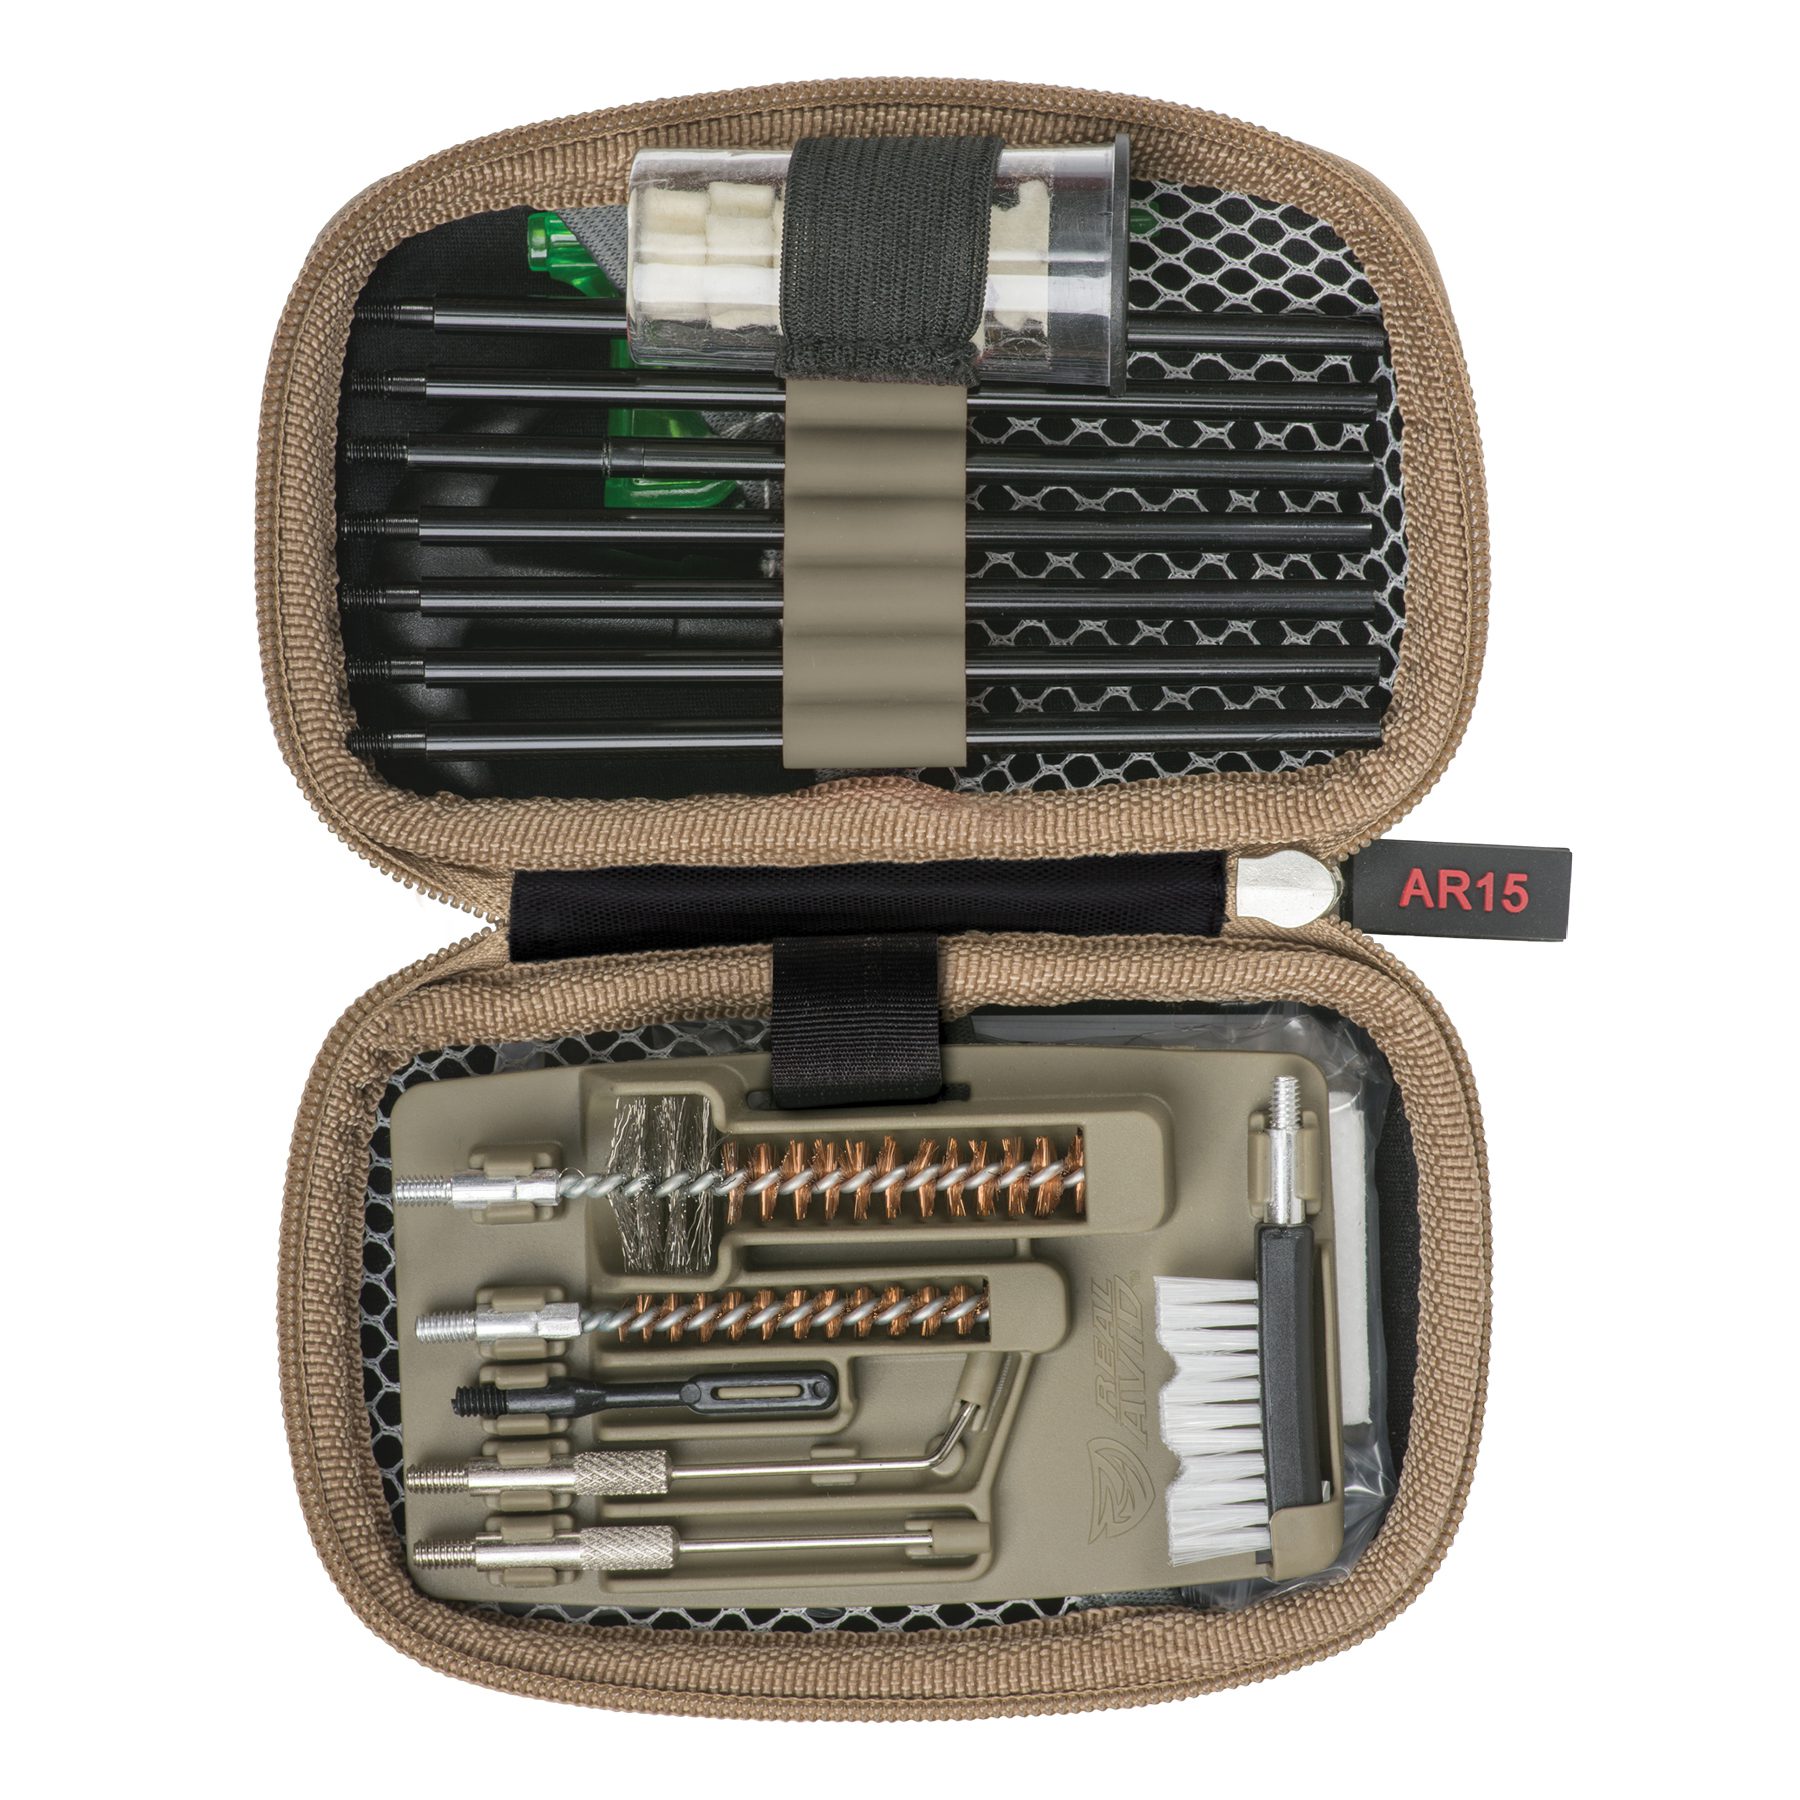 Hard Bristle Brush Cleaning Kit (2-Piece)